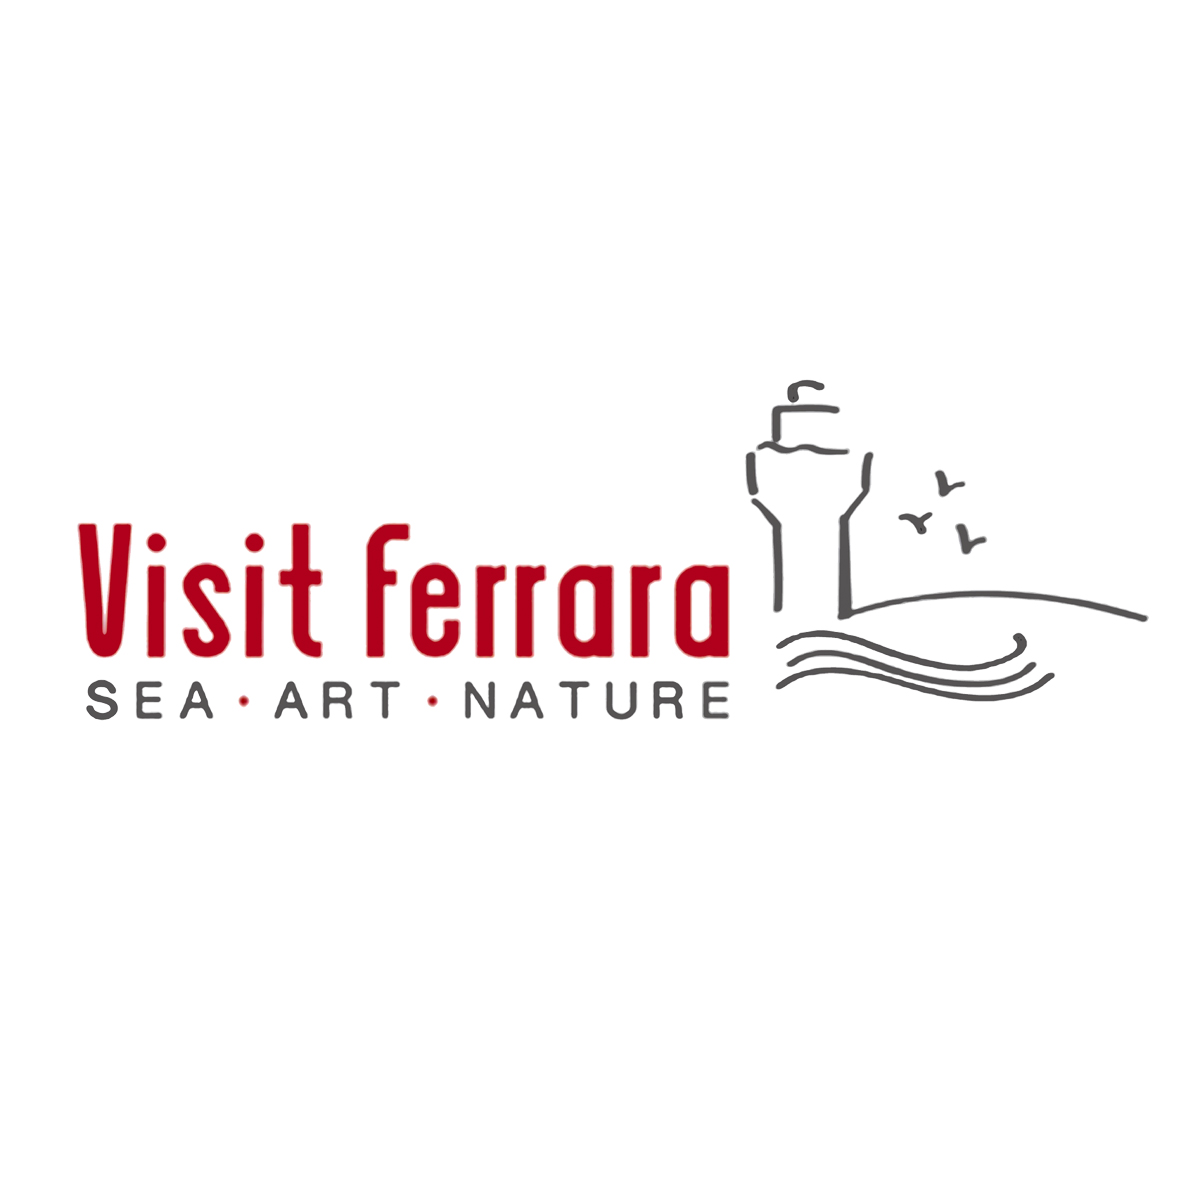 Discover The Authentic Ferrara Visit Ferrara